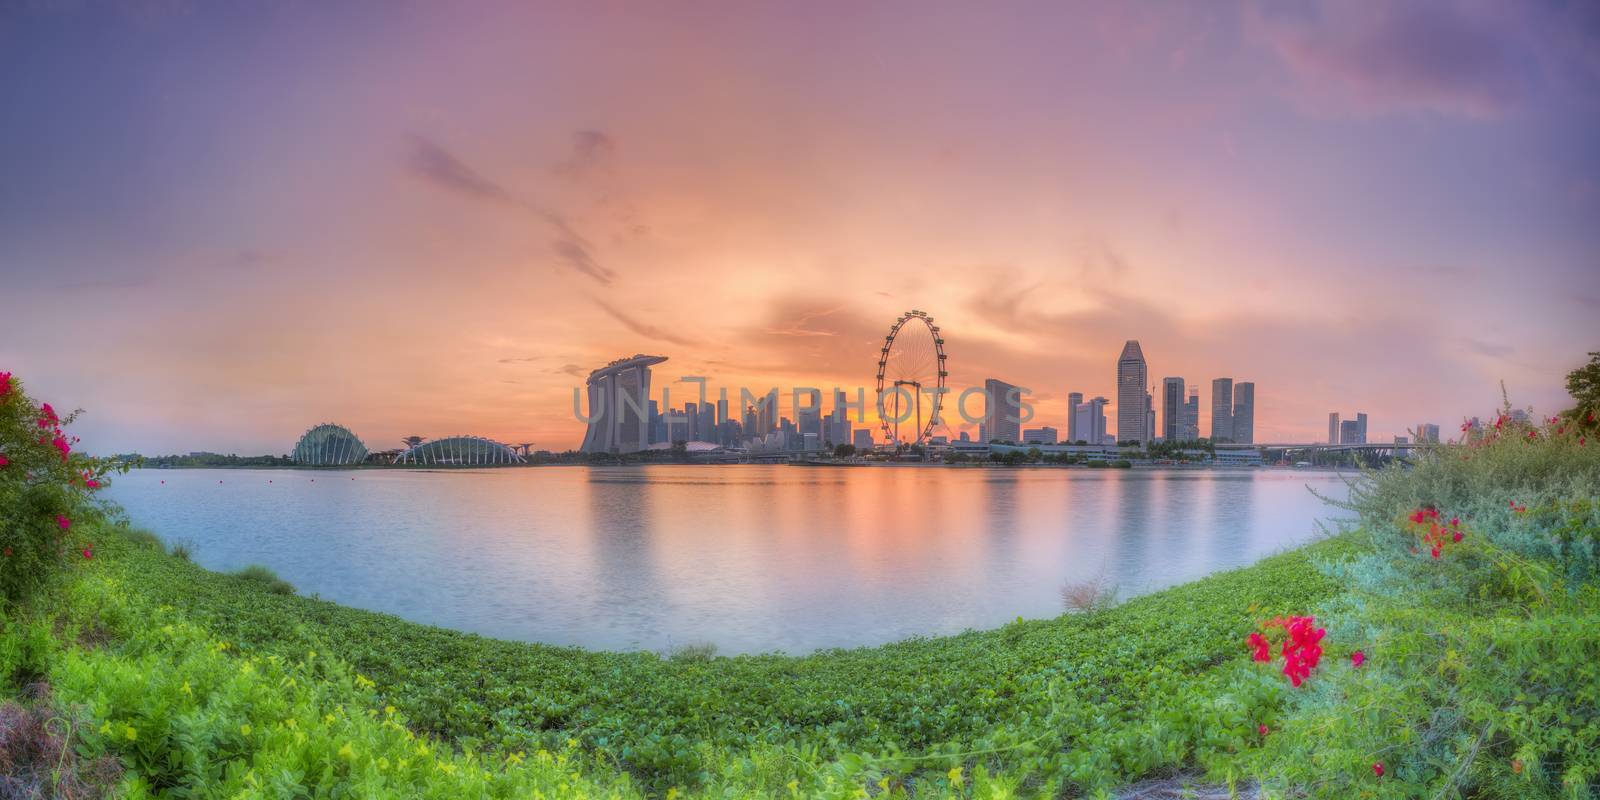 Singapore Skyline at sunset by kjorgen